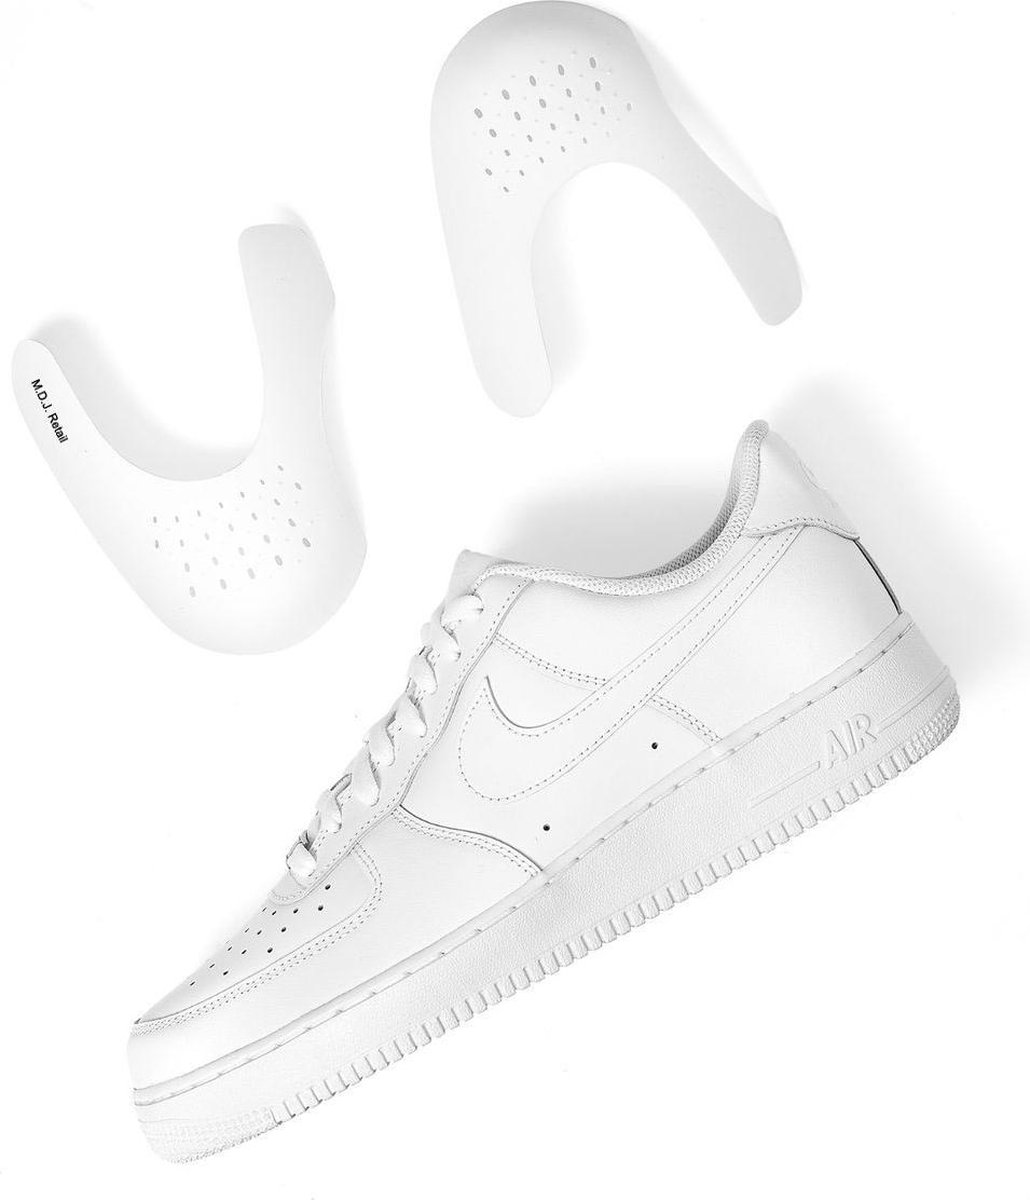 Sneaker Schilden - Anti Crease - Shoe Protector - Large White - Maat 40 t/m 45 - Merkloos